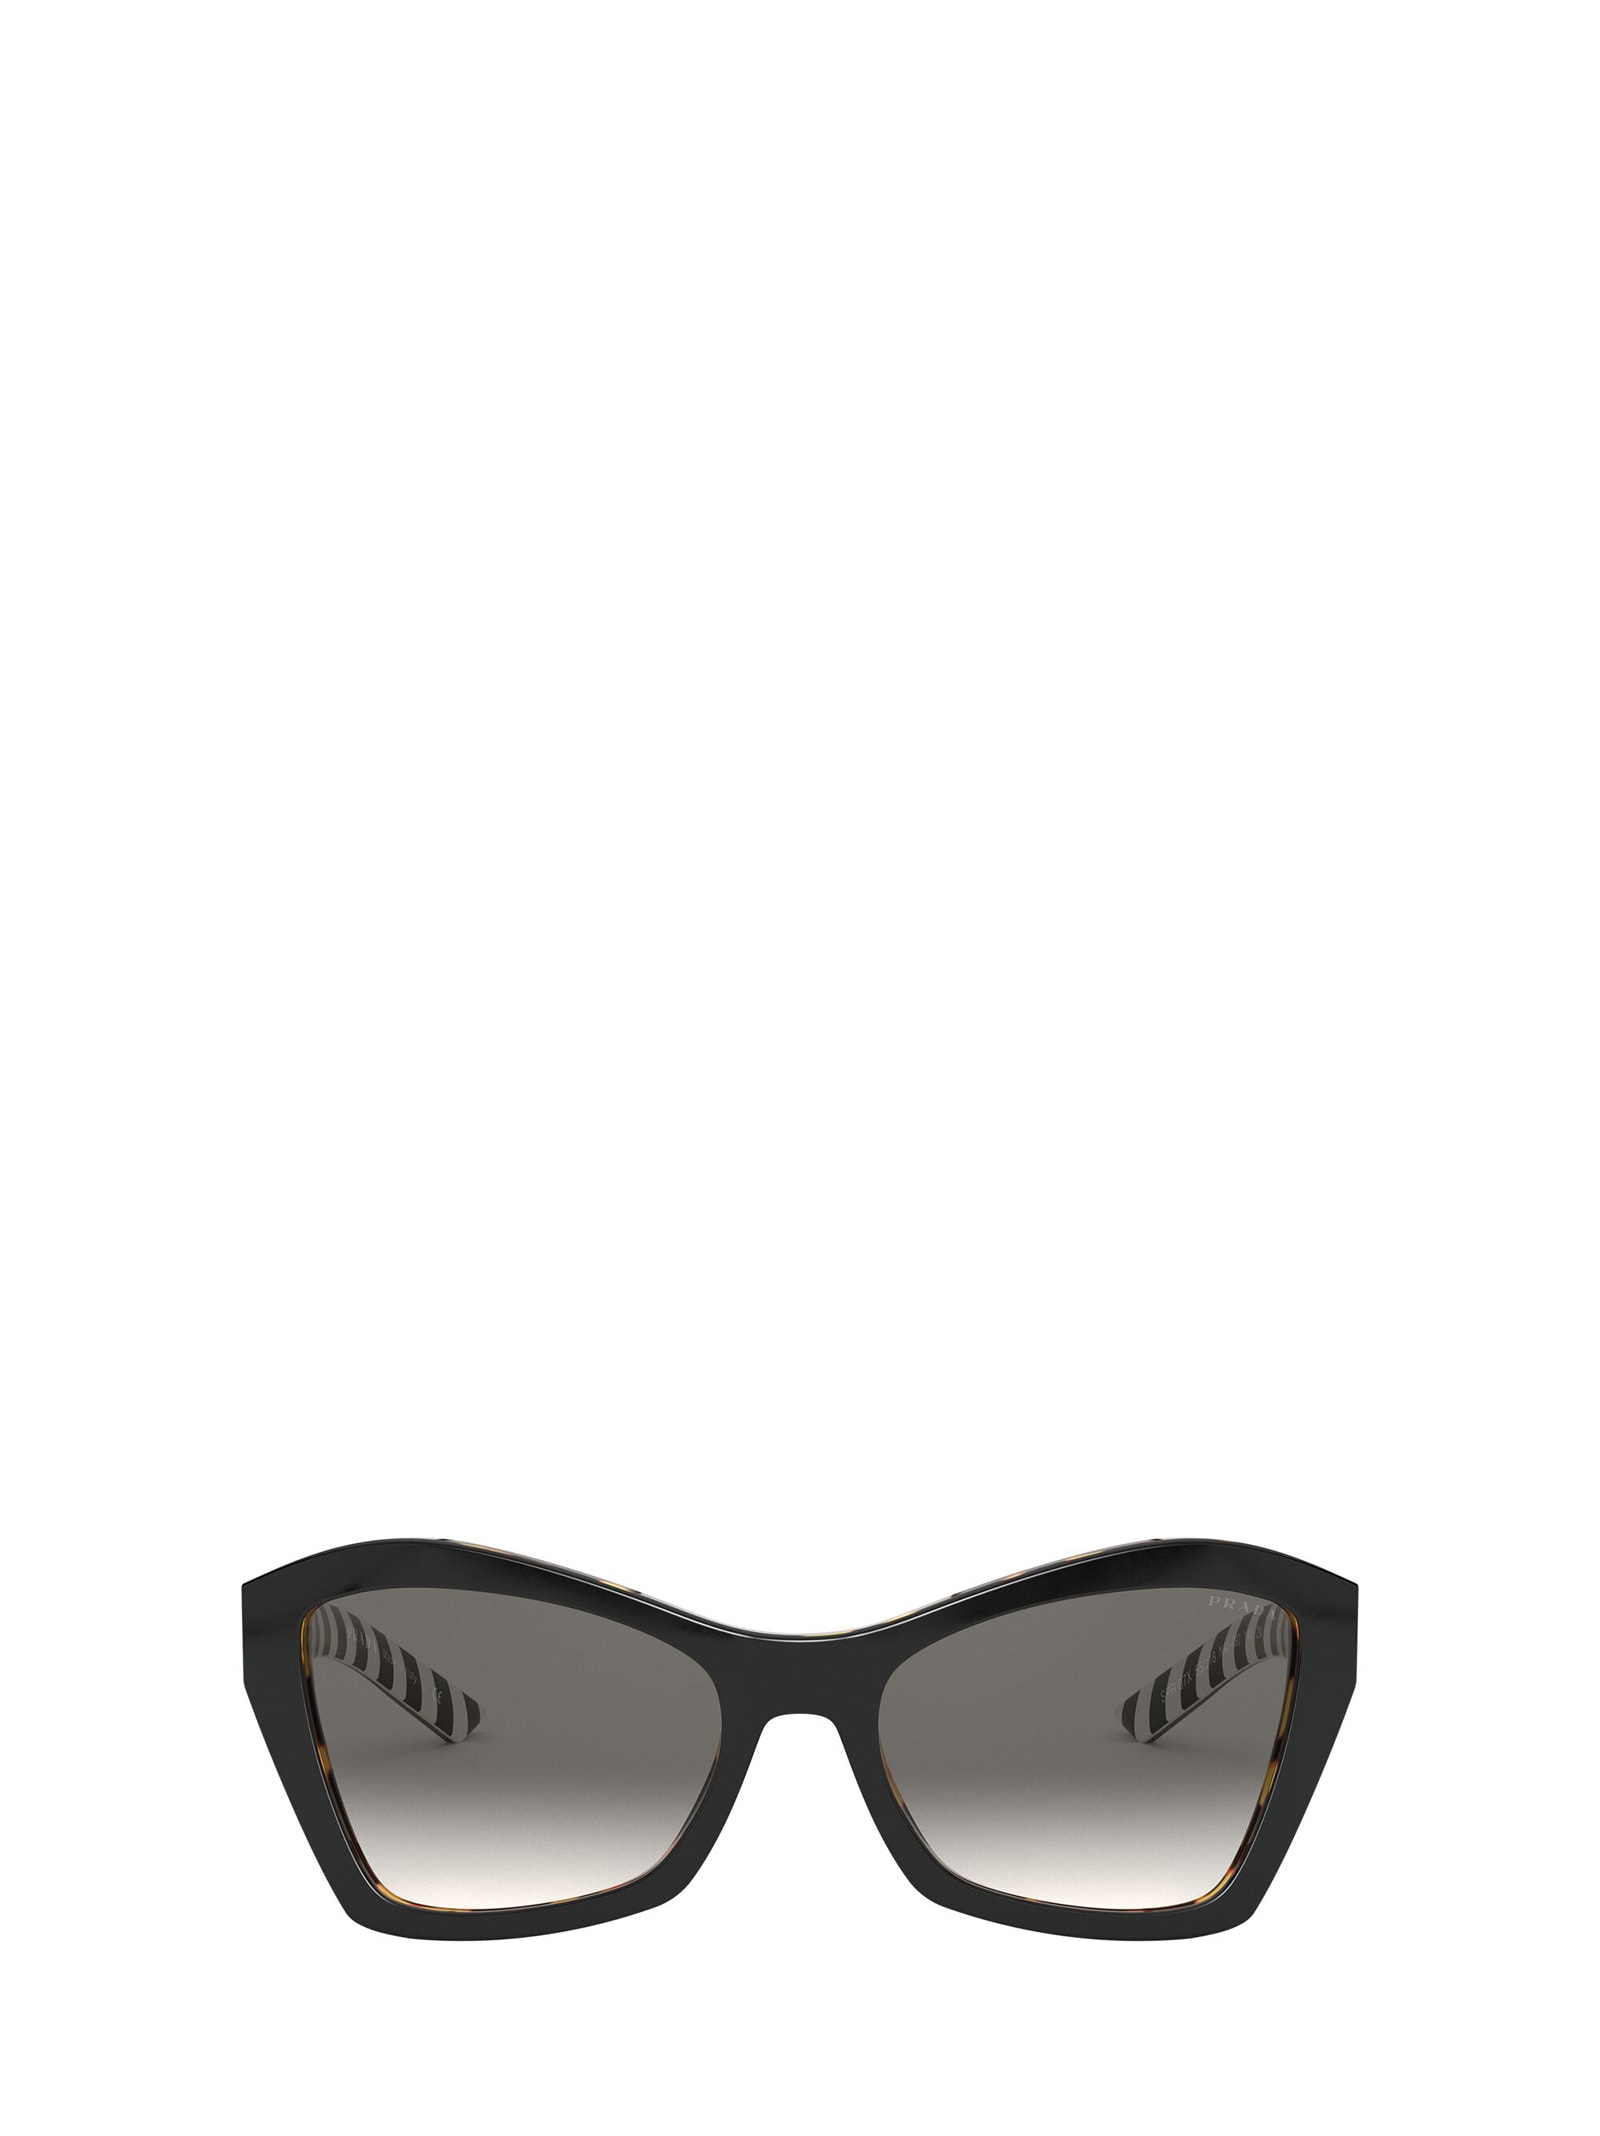 Prada Prada Pr 07xs Top Black / Medium Havana Sunglasses